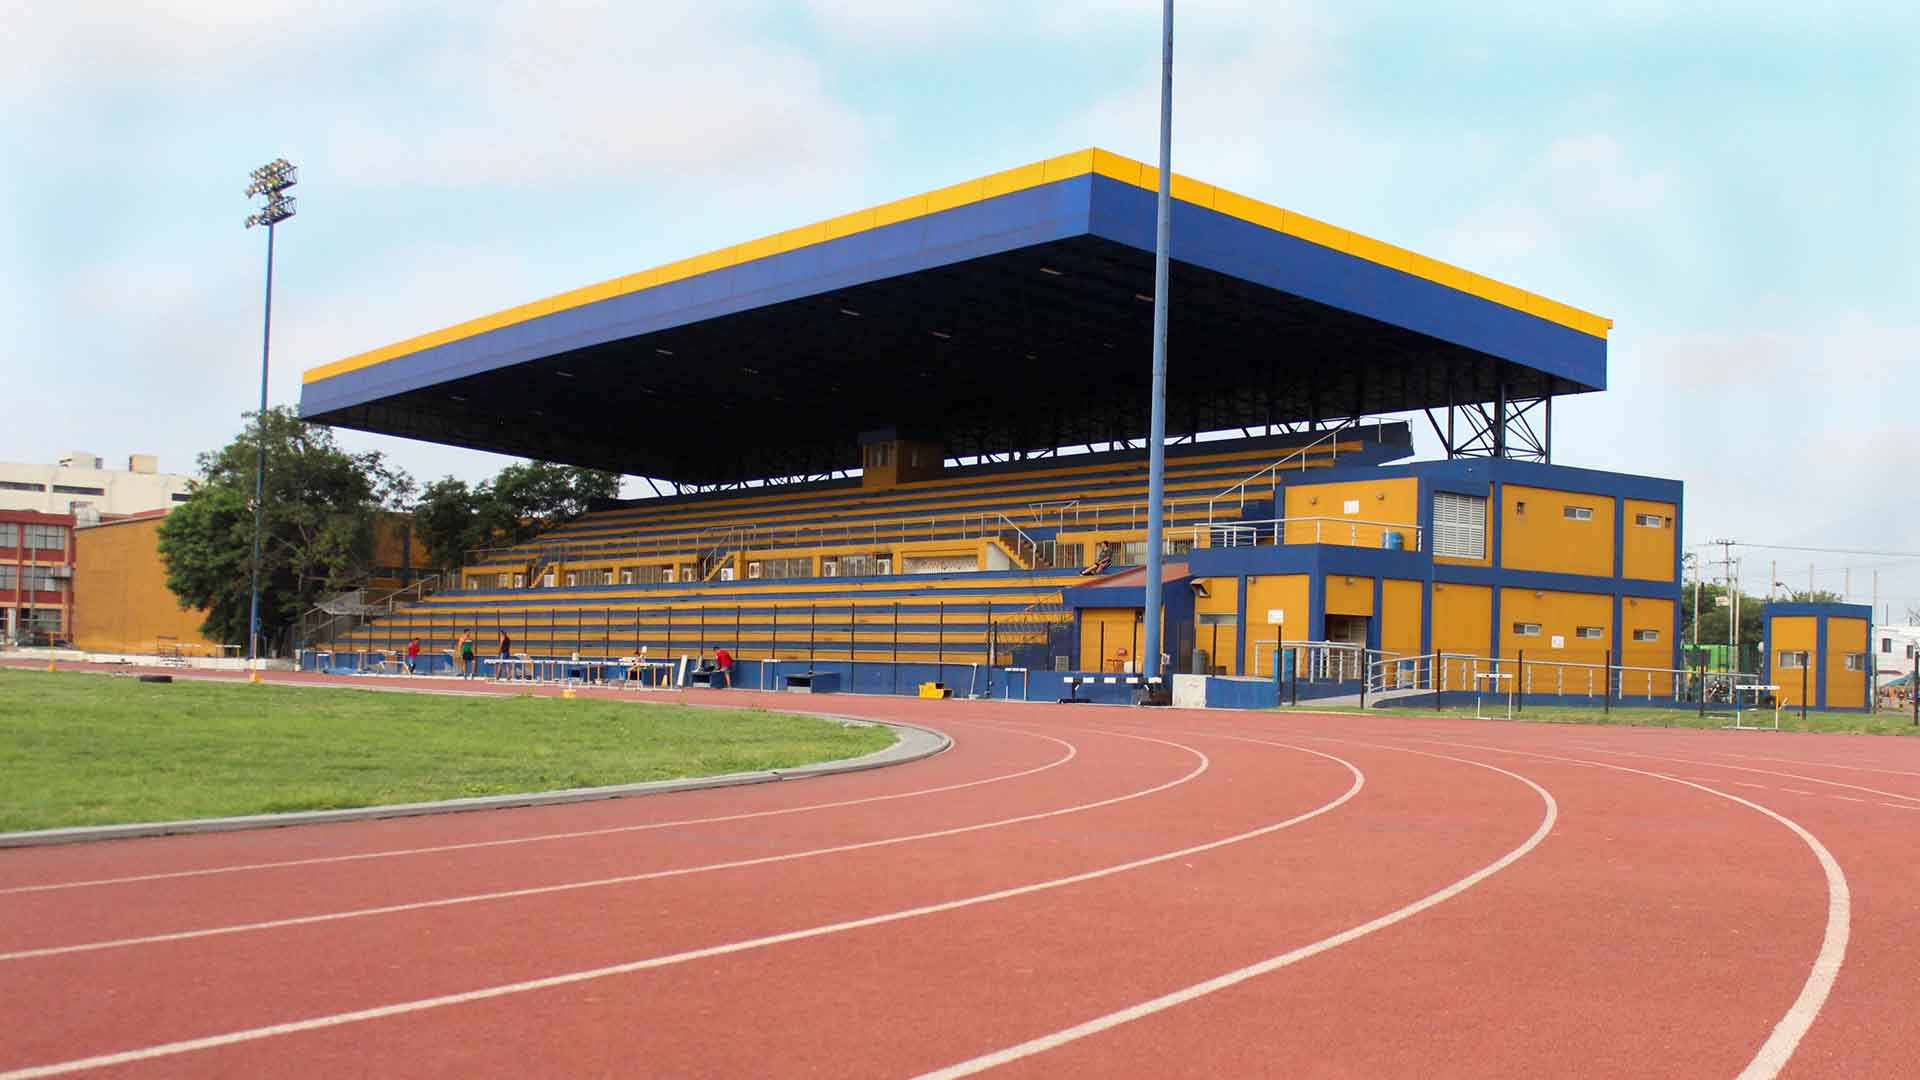 Estadio Raymundo “Chico” Rivera